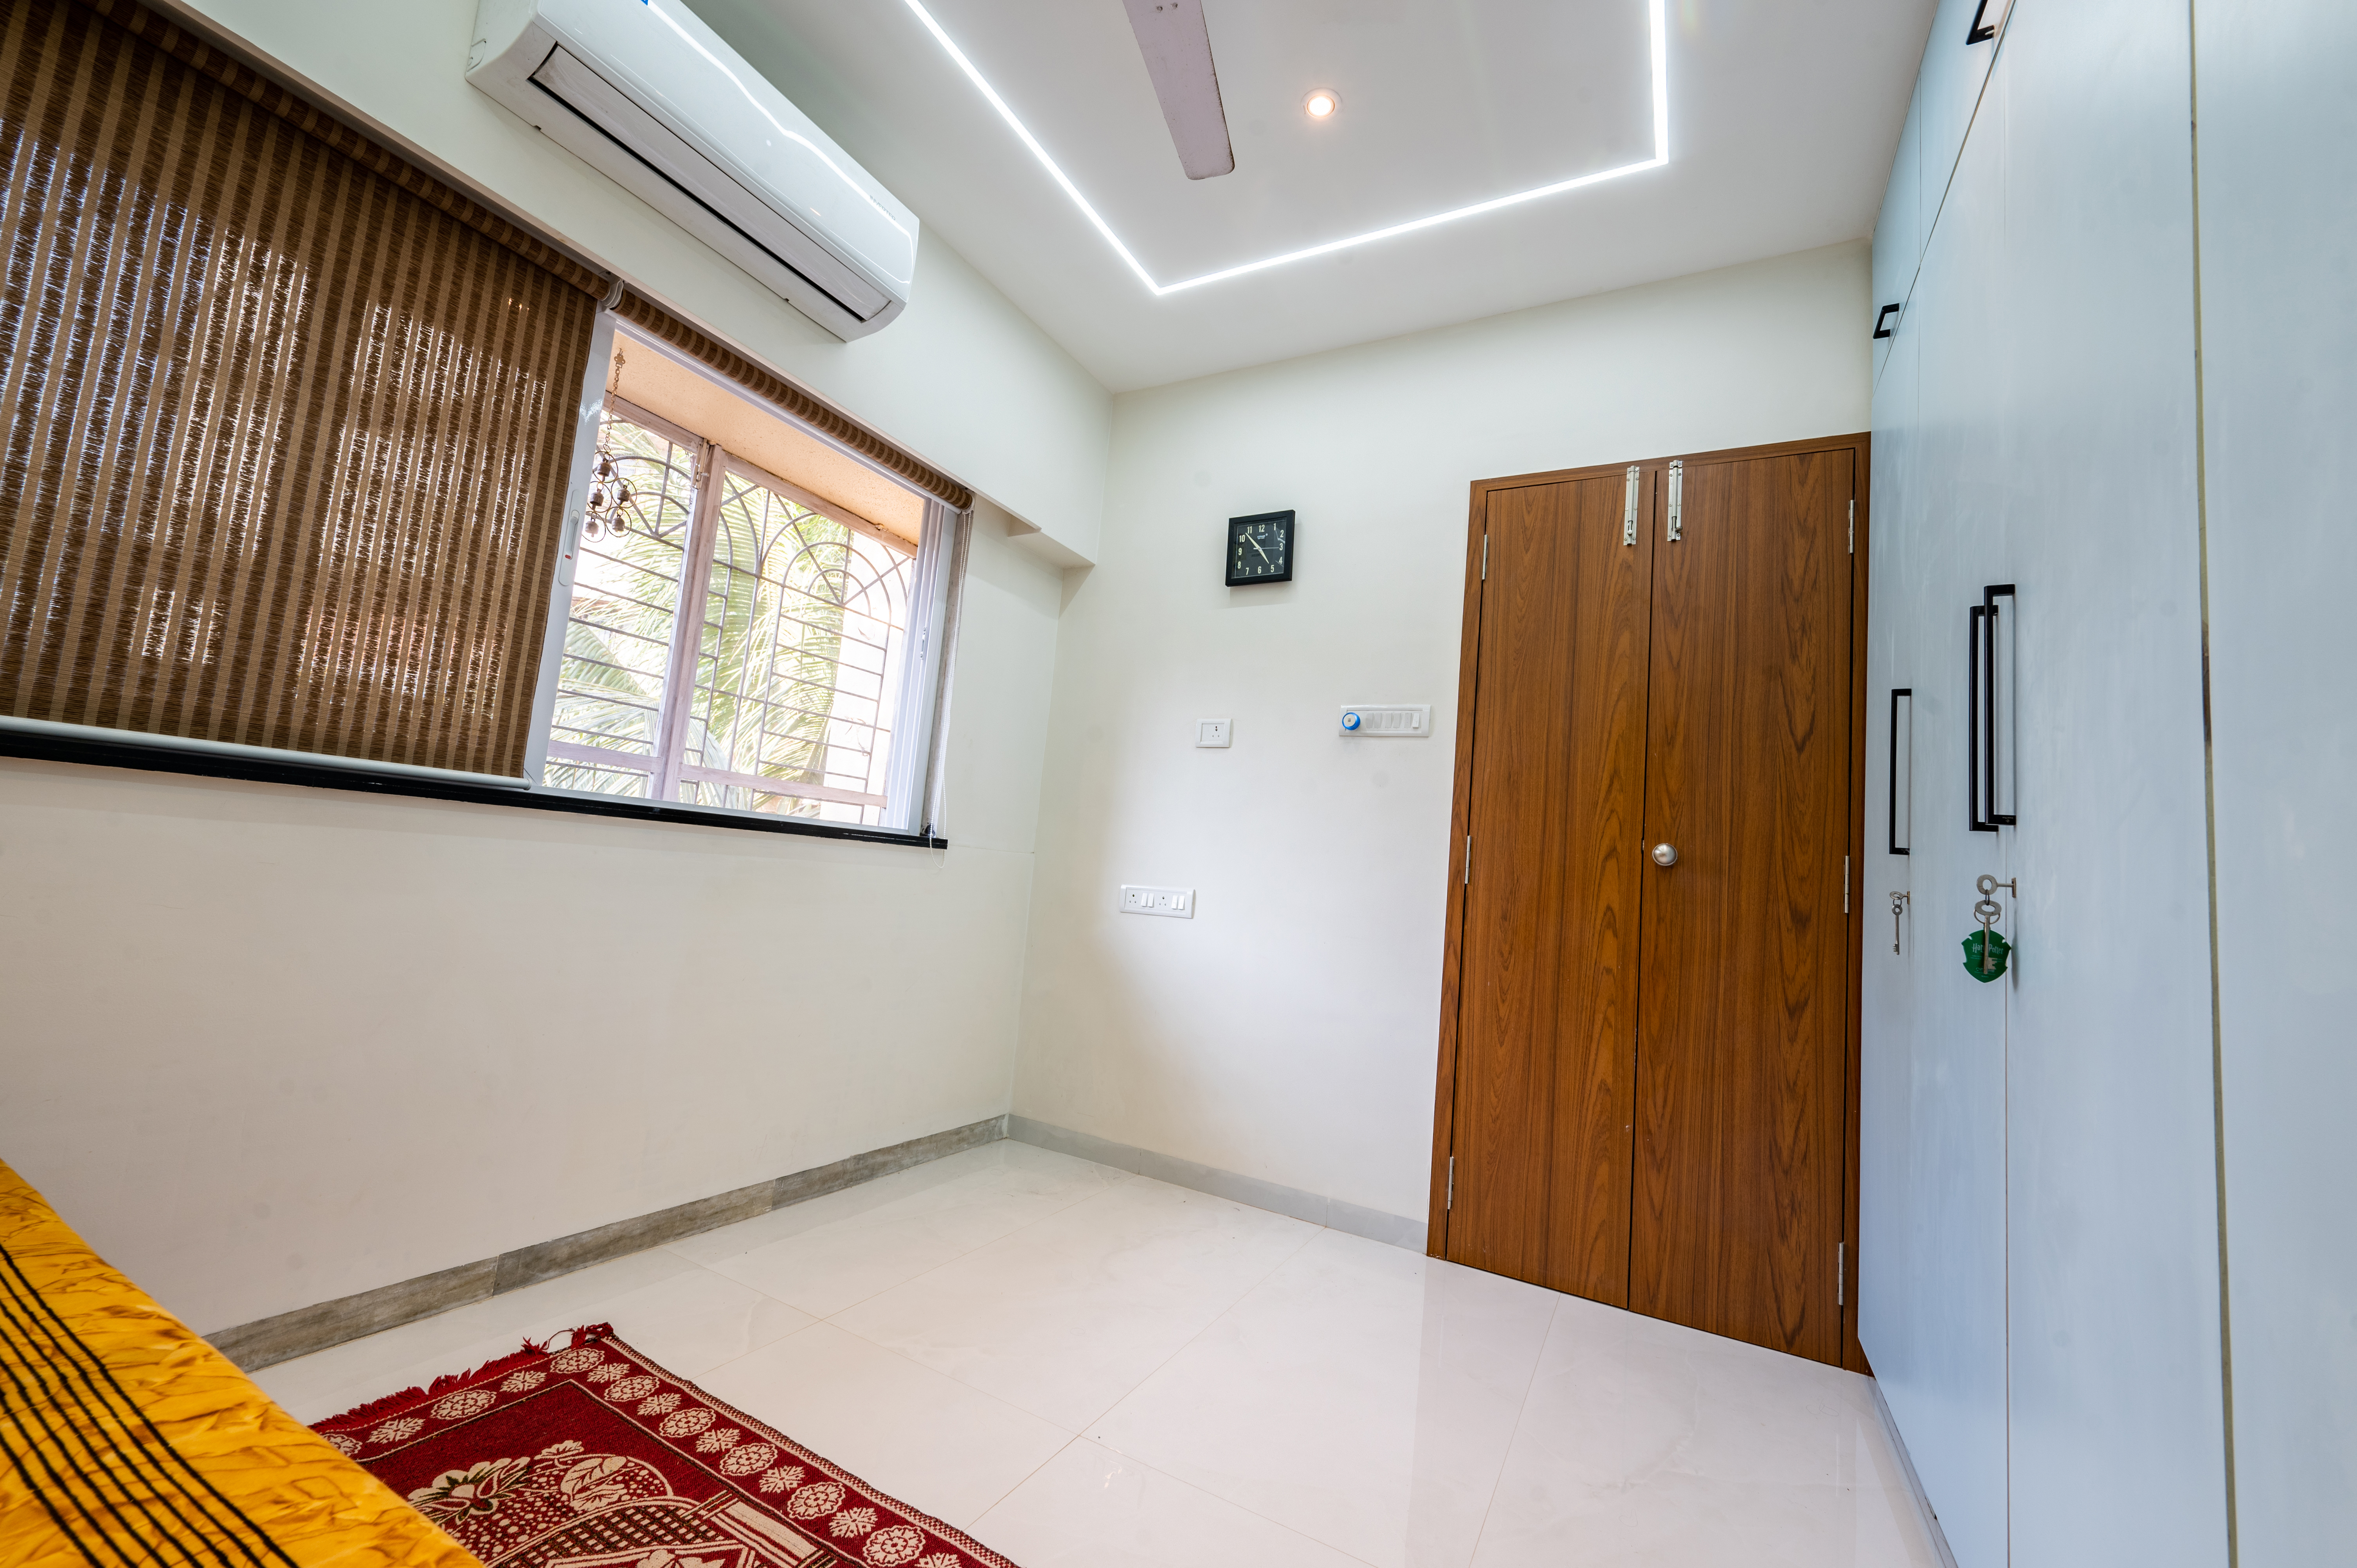 1 BHK Residence Interior at Mulund, Mumbai